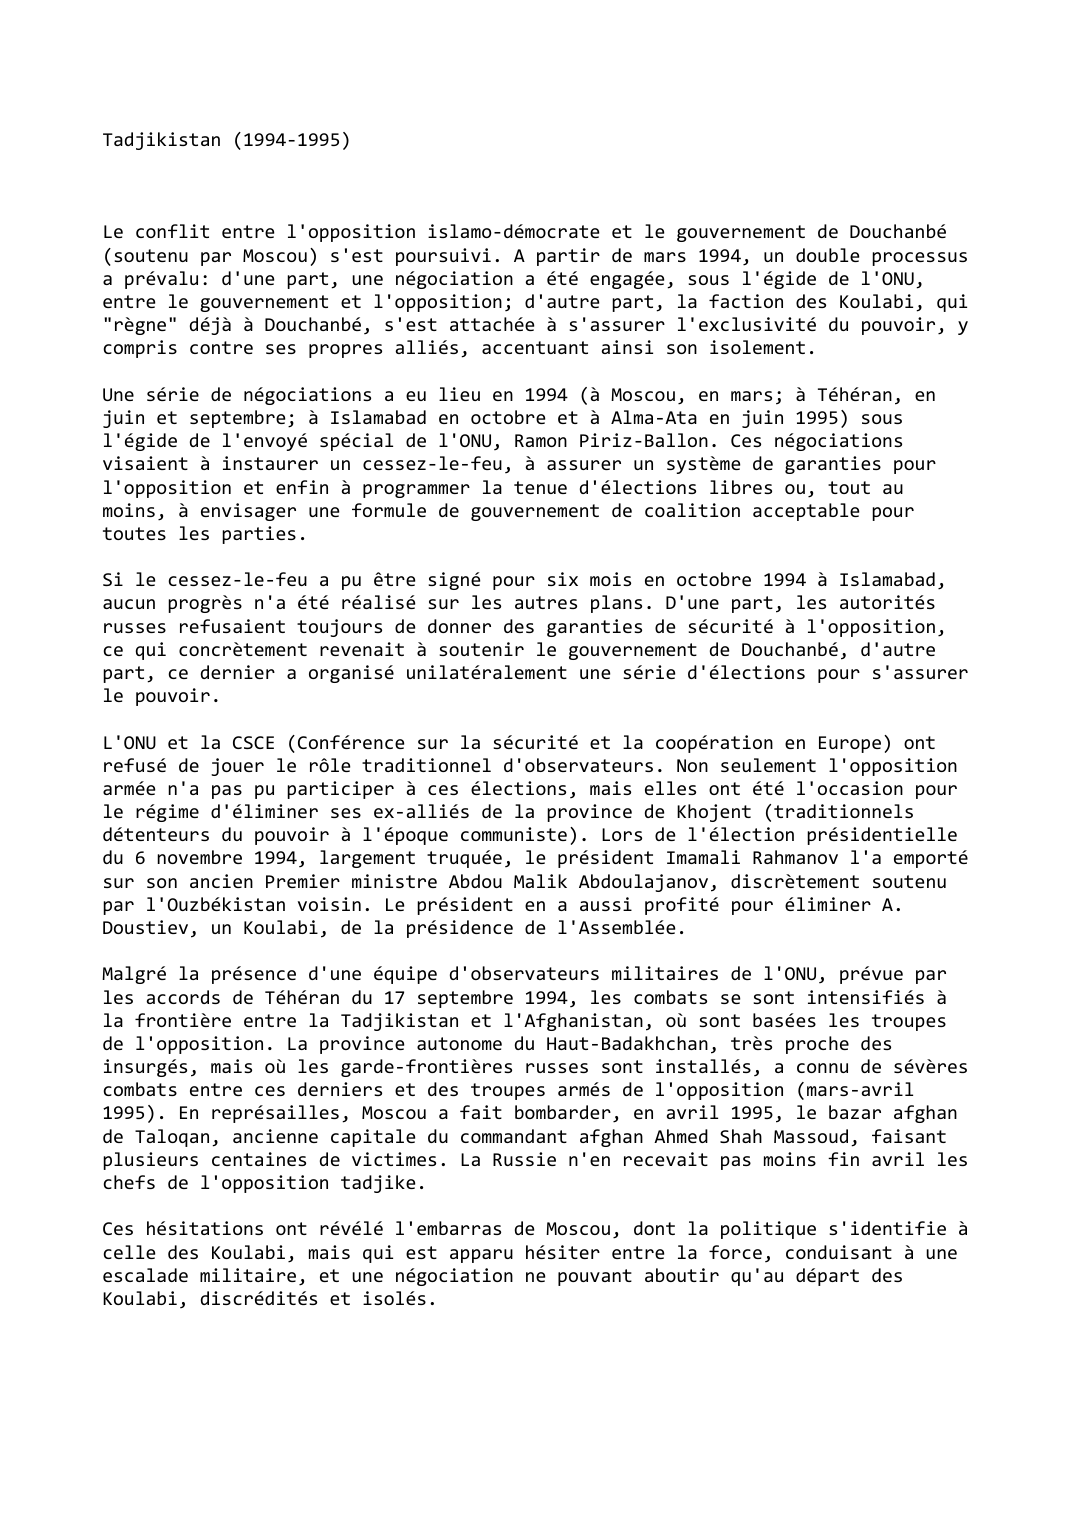 Prévisualisation du document Tadjikistan (1994-1995)